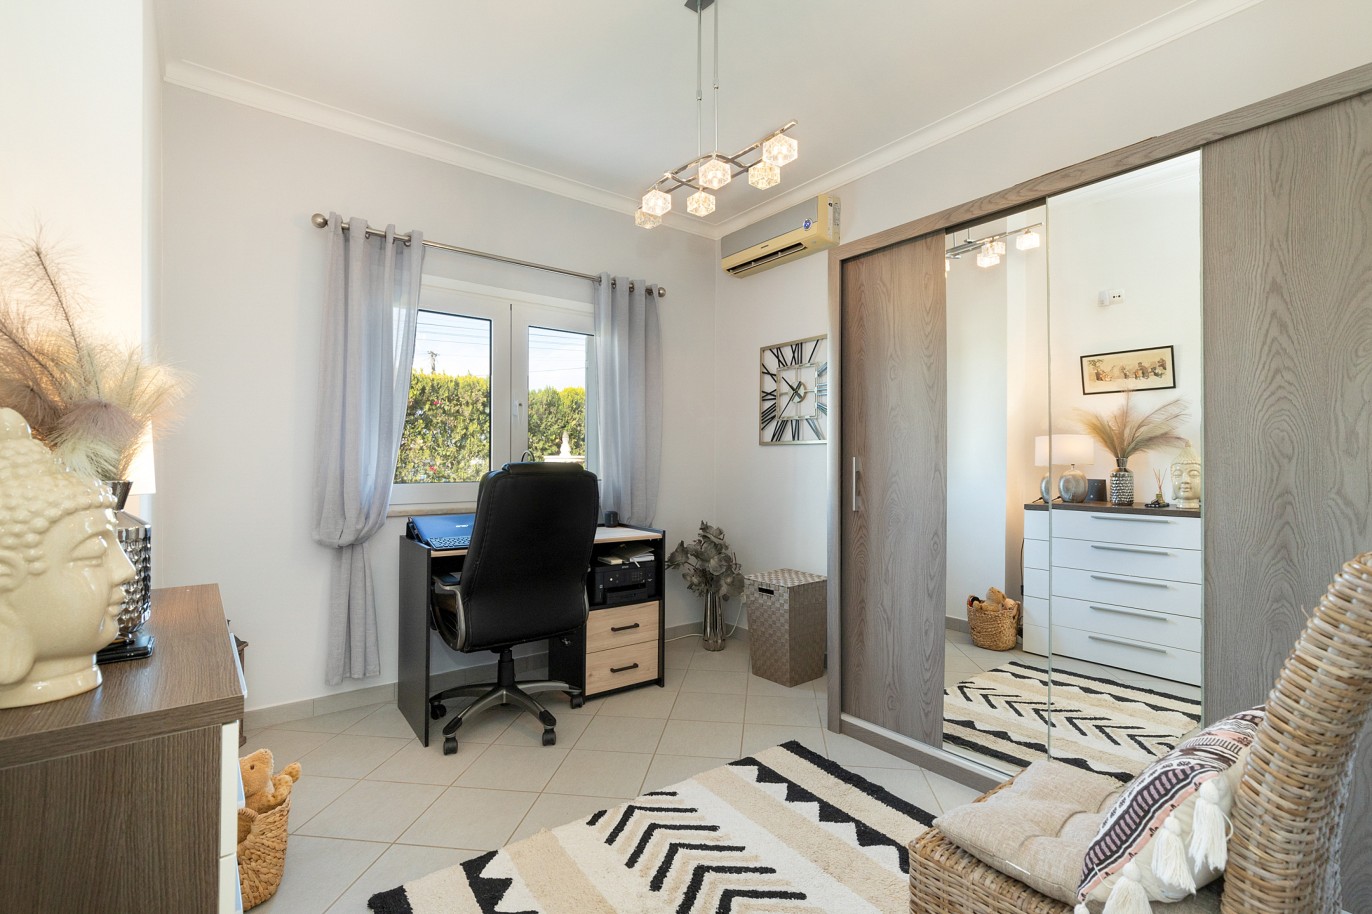 Fantastic 3 bedroom villa with pool, for sale in Algoz, Algarve_215663